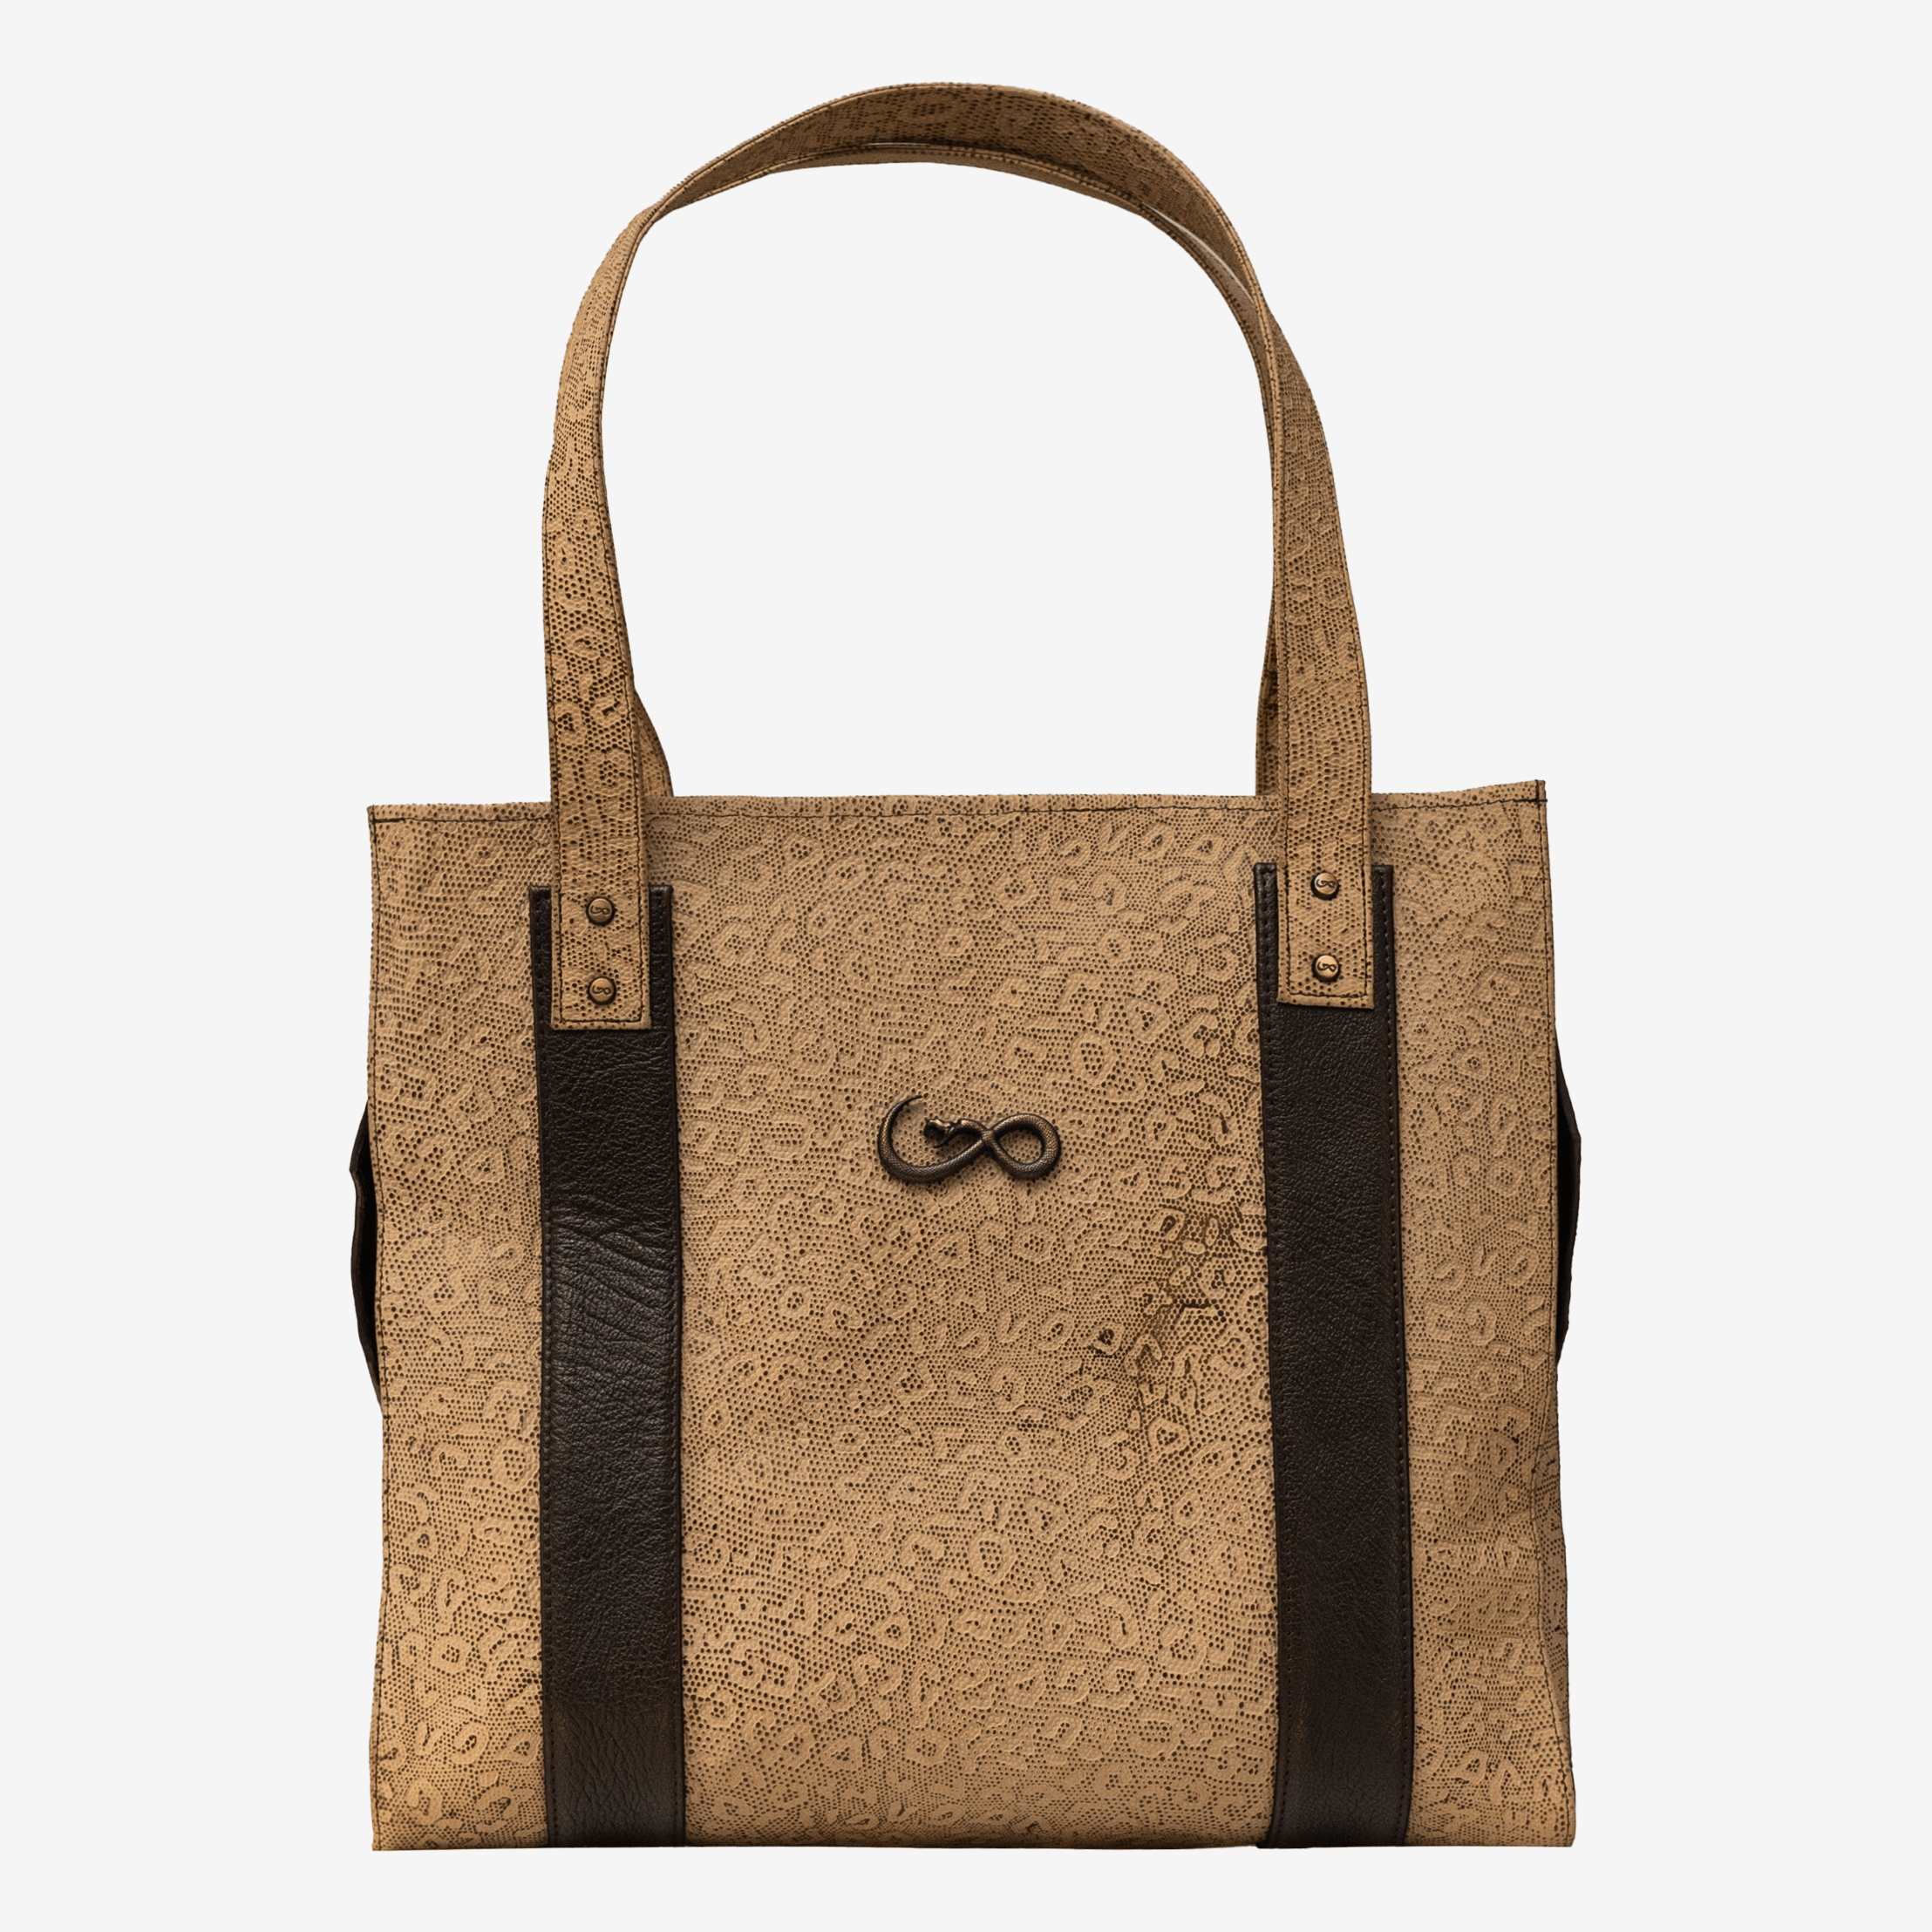 Veneno Leather Goods Tote bag - ELENA BROWN (Laptop)